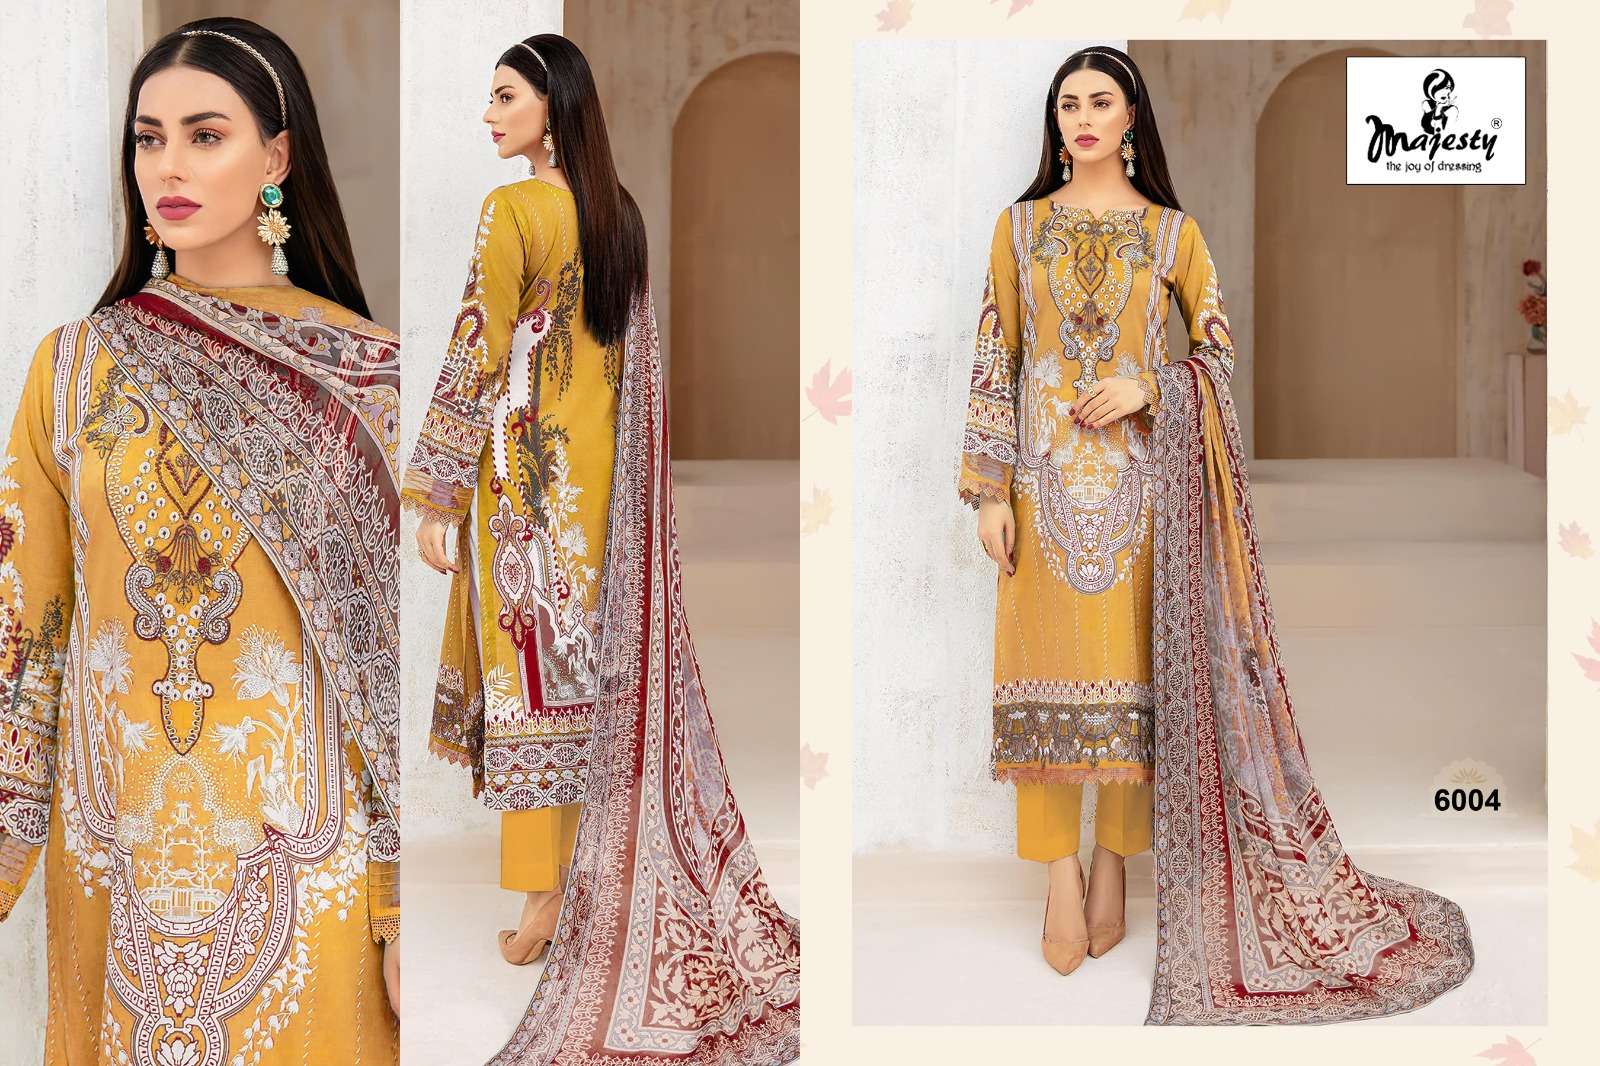 majesty cheveron lawn vol-6 6001-6006 series trendy designer pakistani salwar kameez catalogue manufacturer surat 